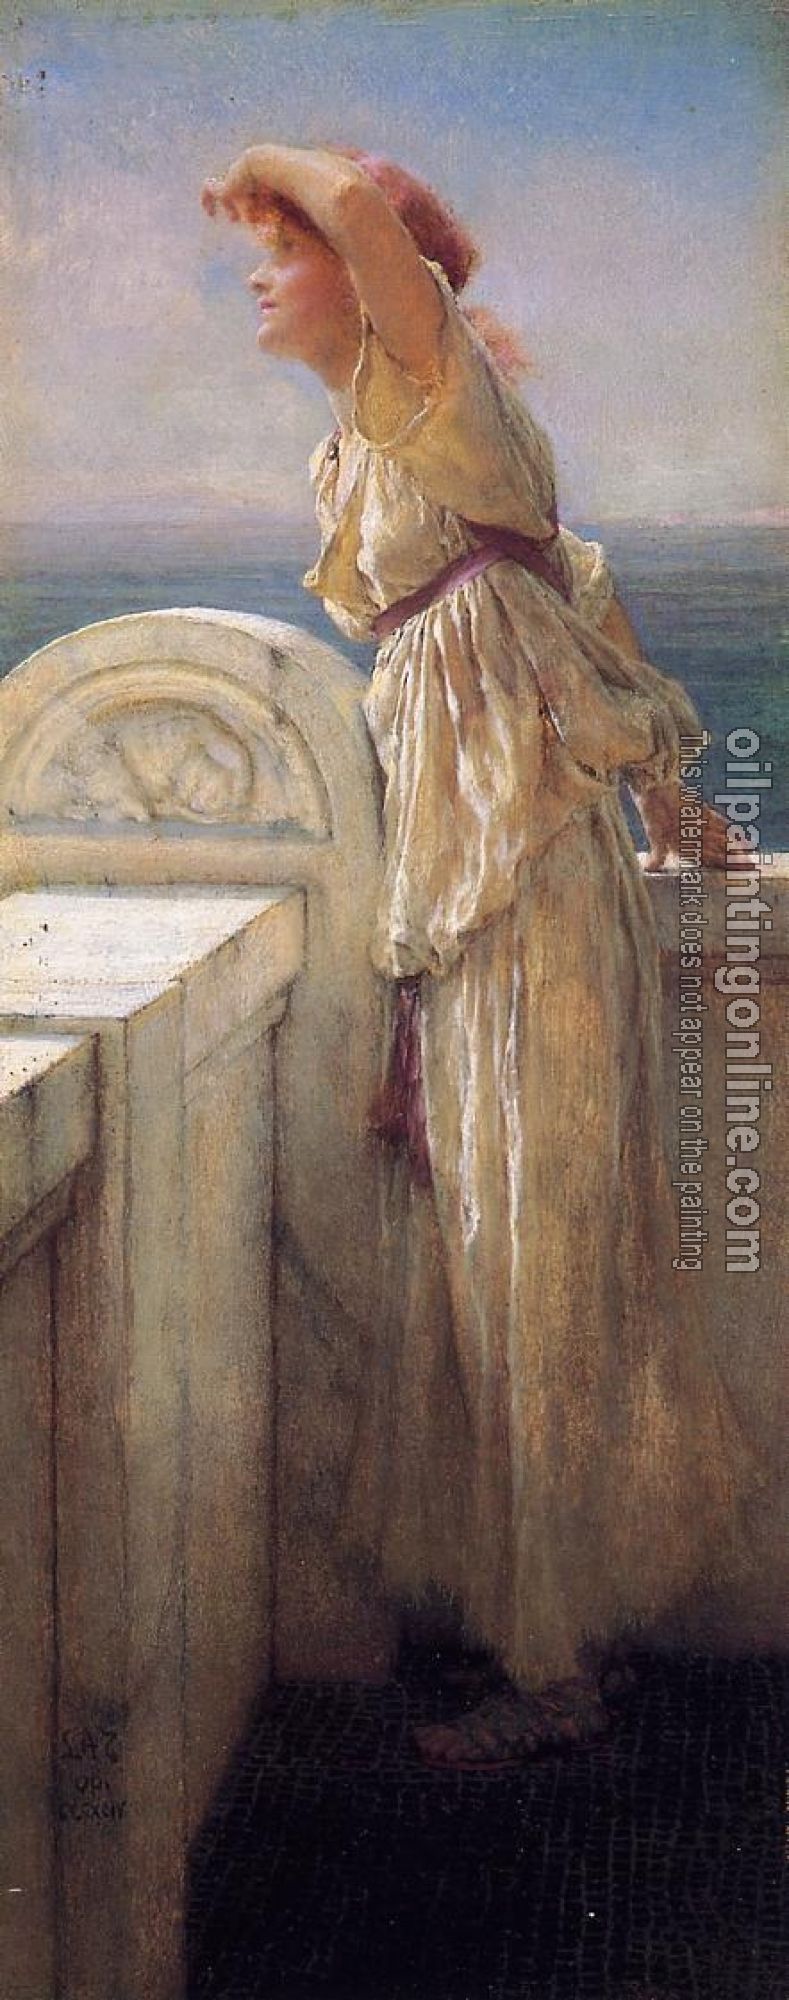 Alma-Tadema, Sir Lawrence - Hopeful